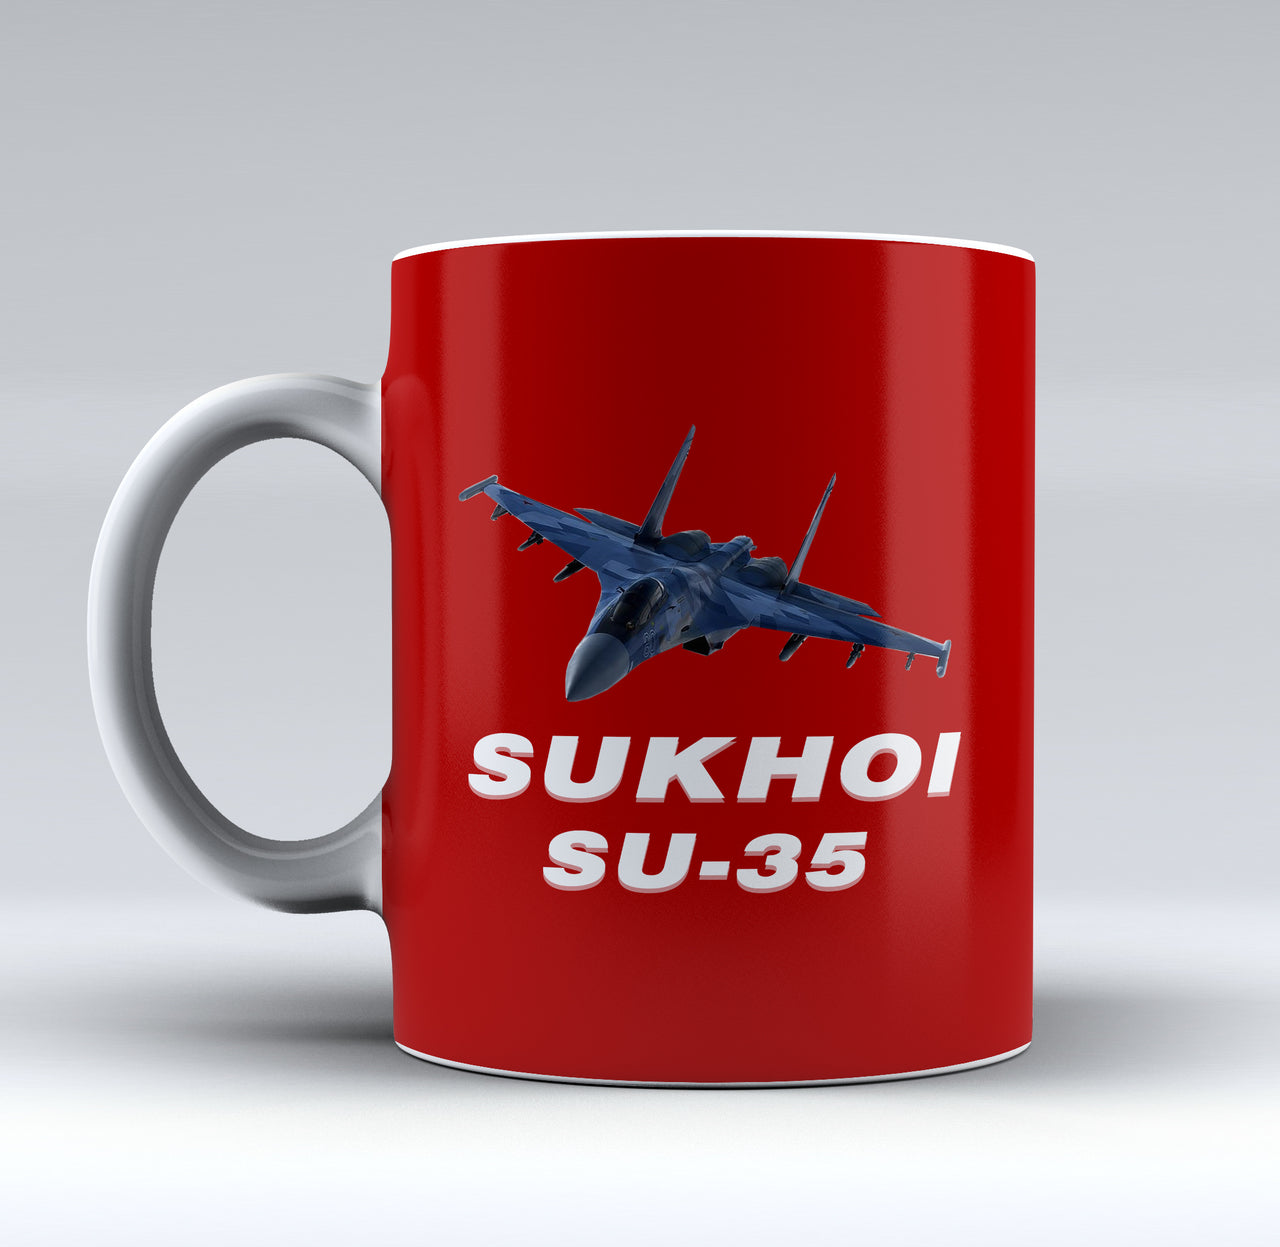 The Sukhoi SU-35 Designed Mugs